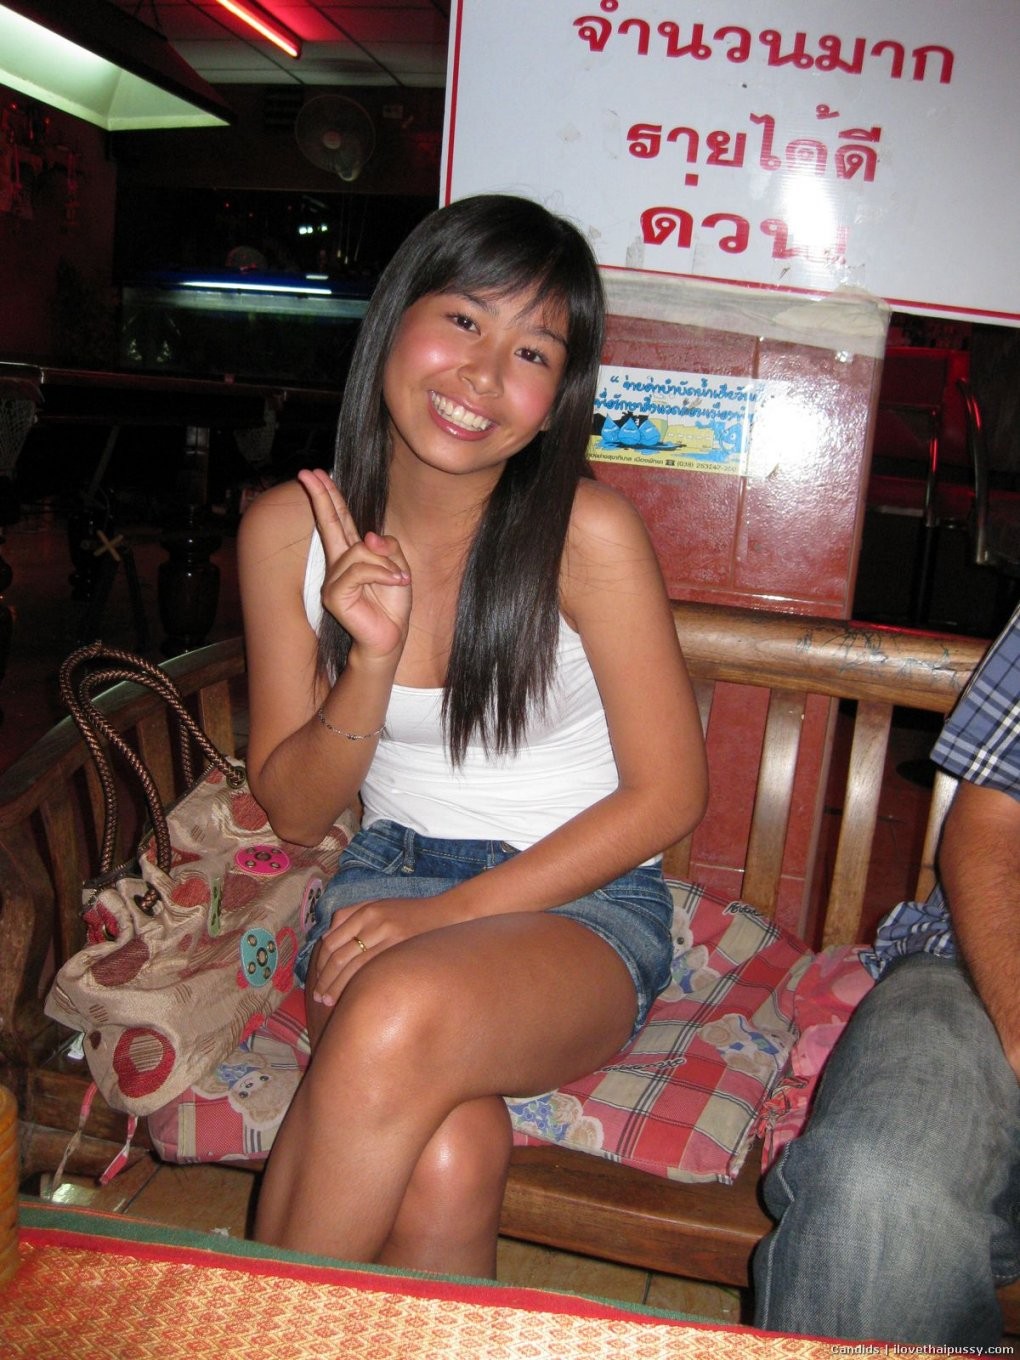 Hot thai bargirl hooker loves bareback no condom fucking sex tourists asian puss #67970449